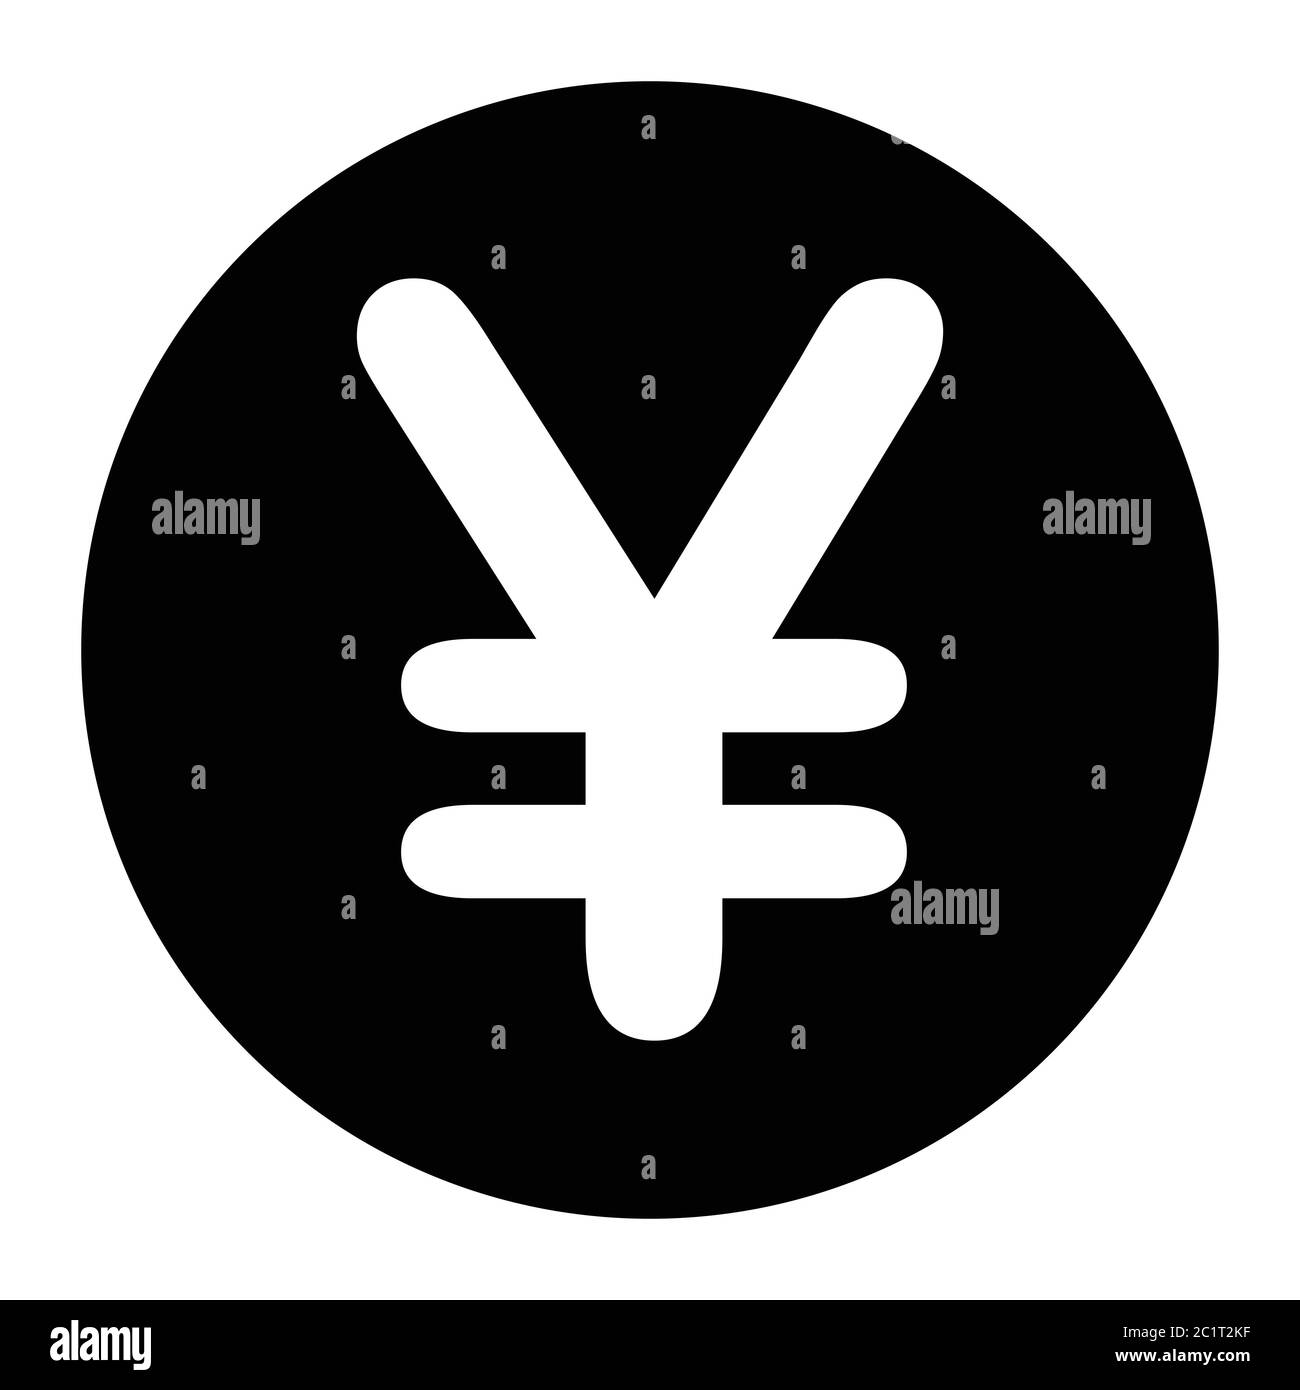 JPY Japanese Yen Symbol Sign. Black Illustration Isolated on a White Background. EPS Vector Stock Vector